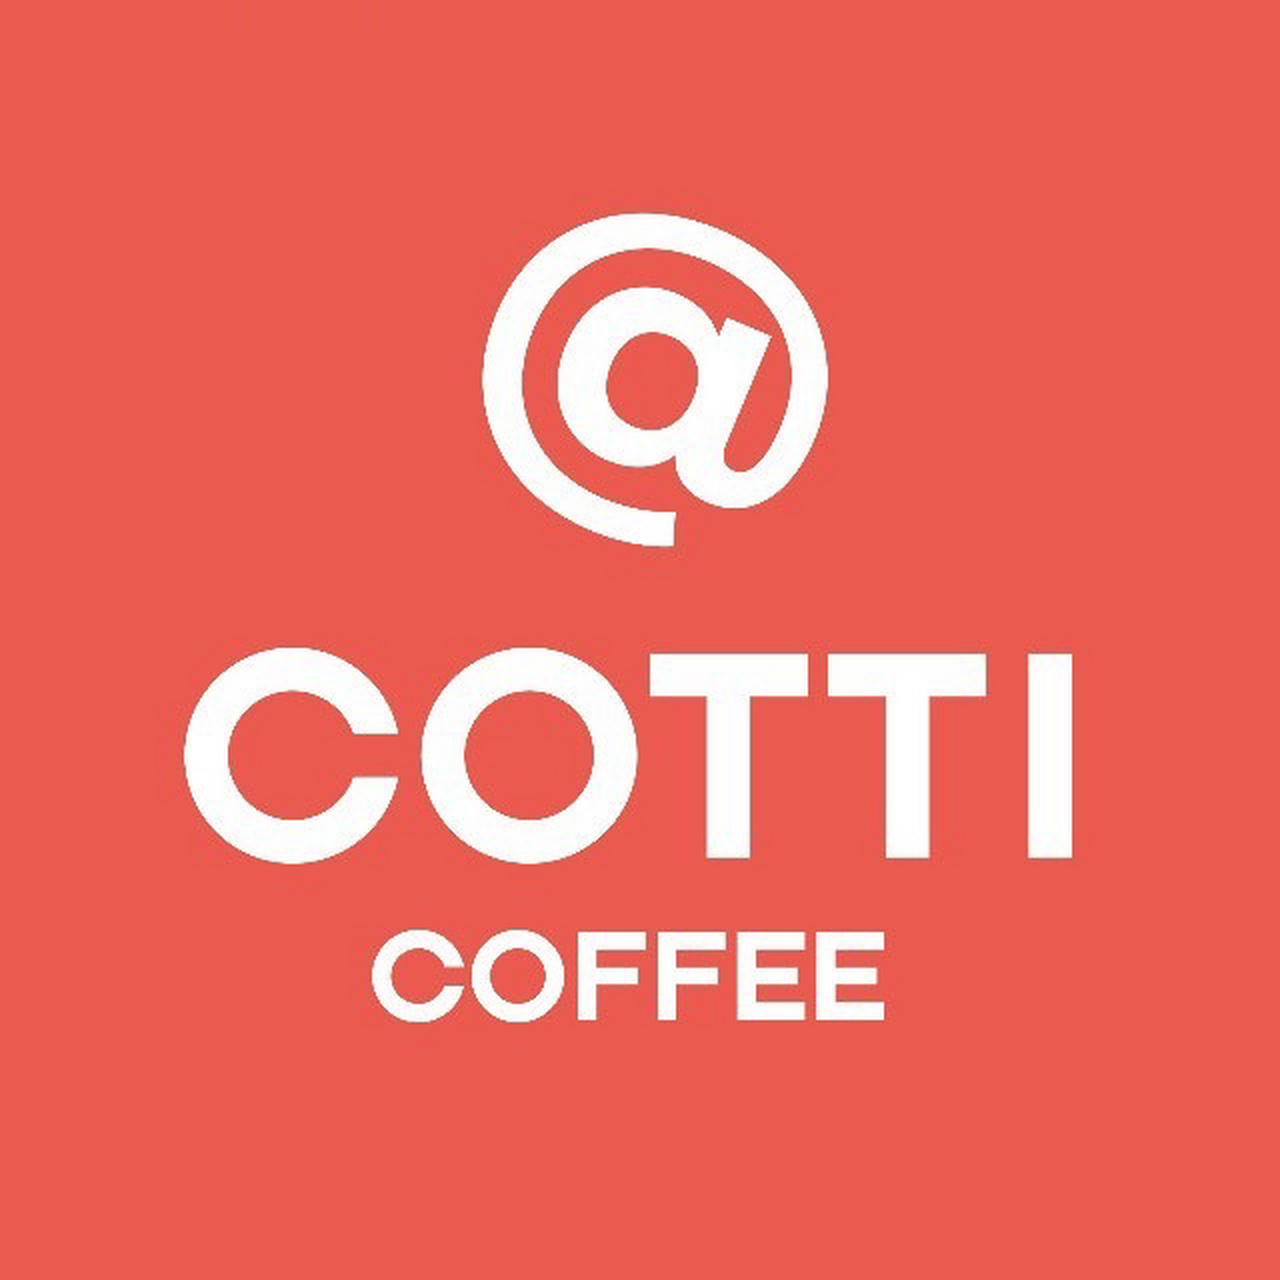 kcoffee logo图片